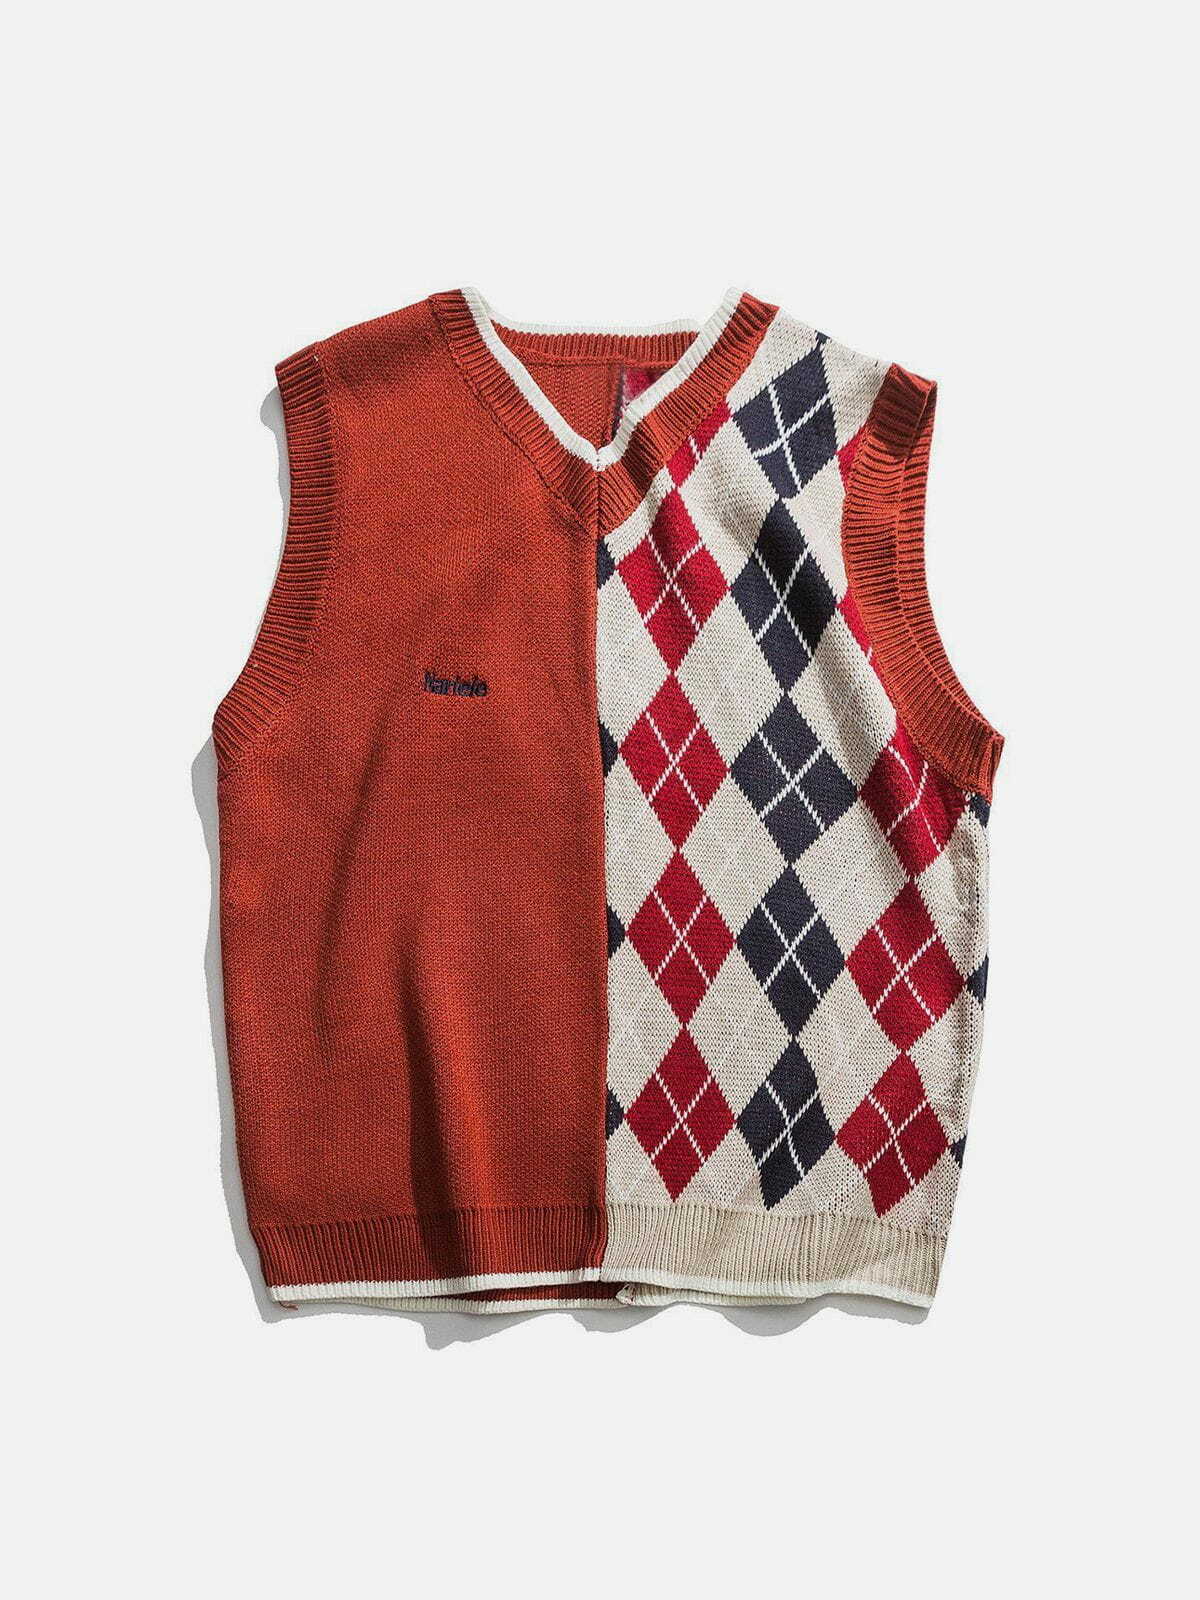 diamond stitch sweater vest edgy streetwear essential 1902